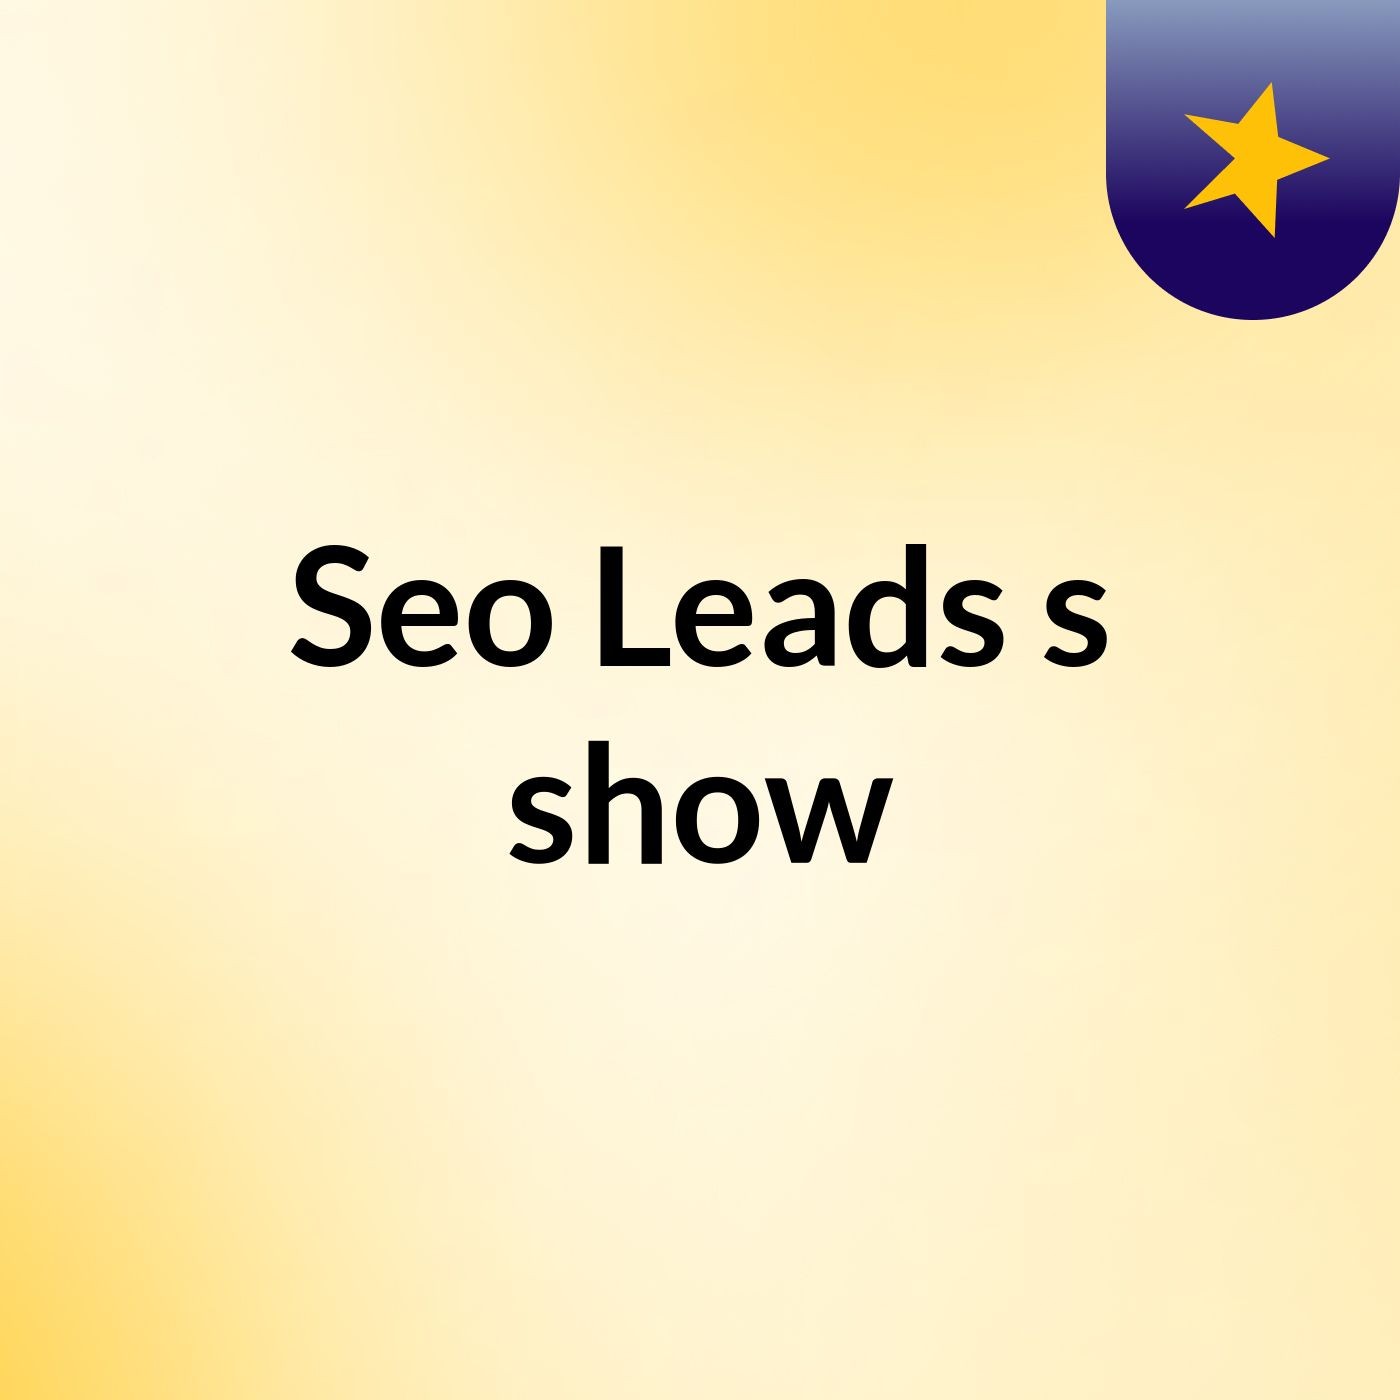 Seo Leads's show